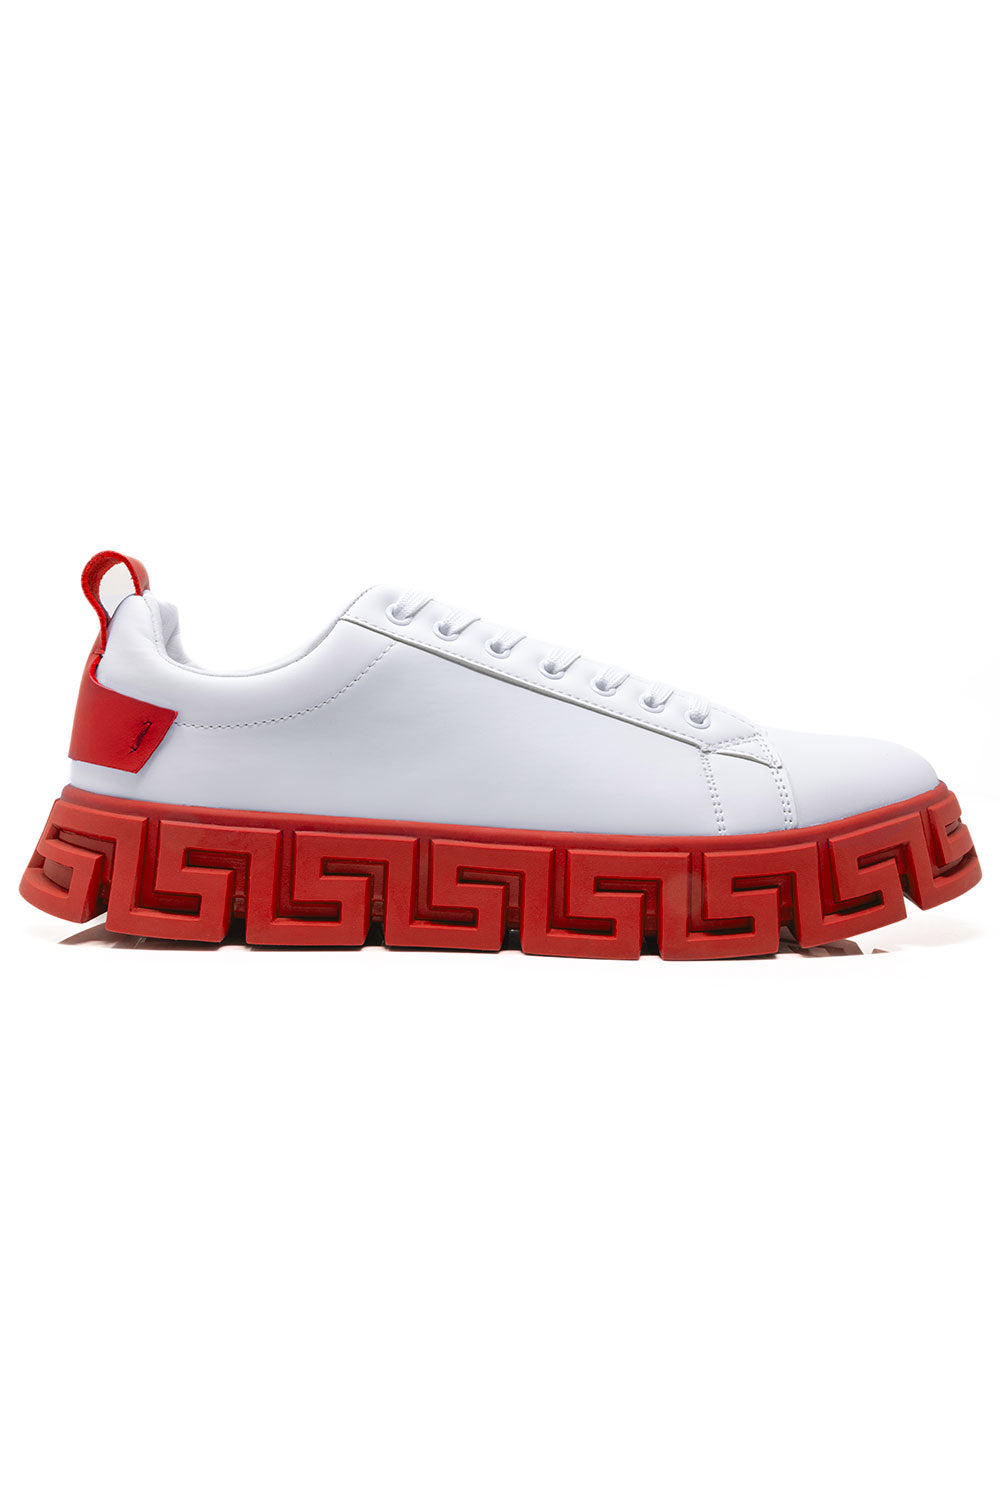 Barabas Men's Greek Key Sole Pattern Premium Sneakers 4SK06 White Red